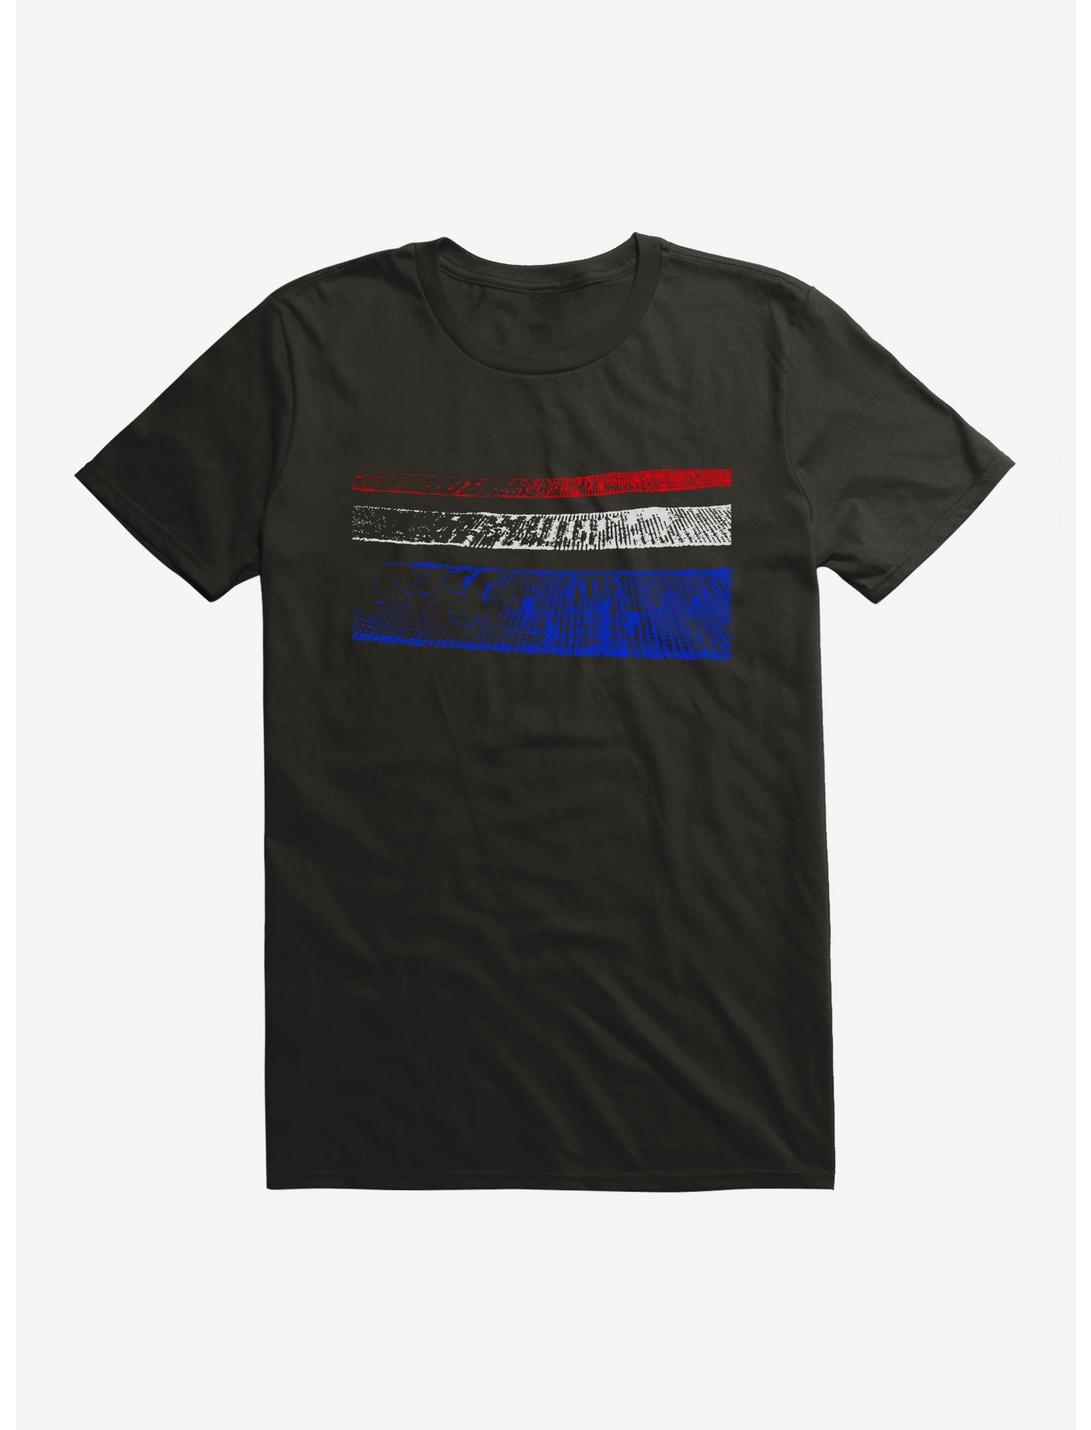 iCreate Americana Wavy Stripes T-Shirt, , hi-res